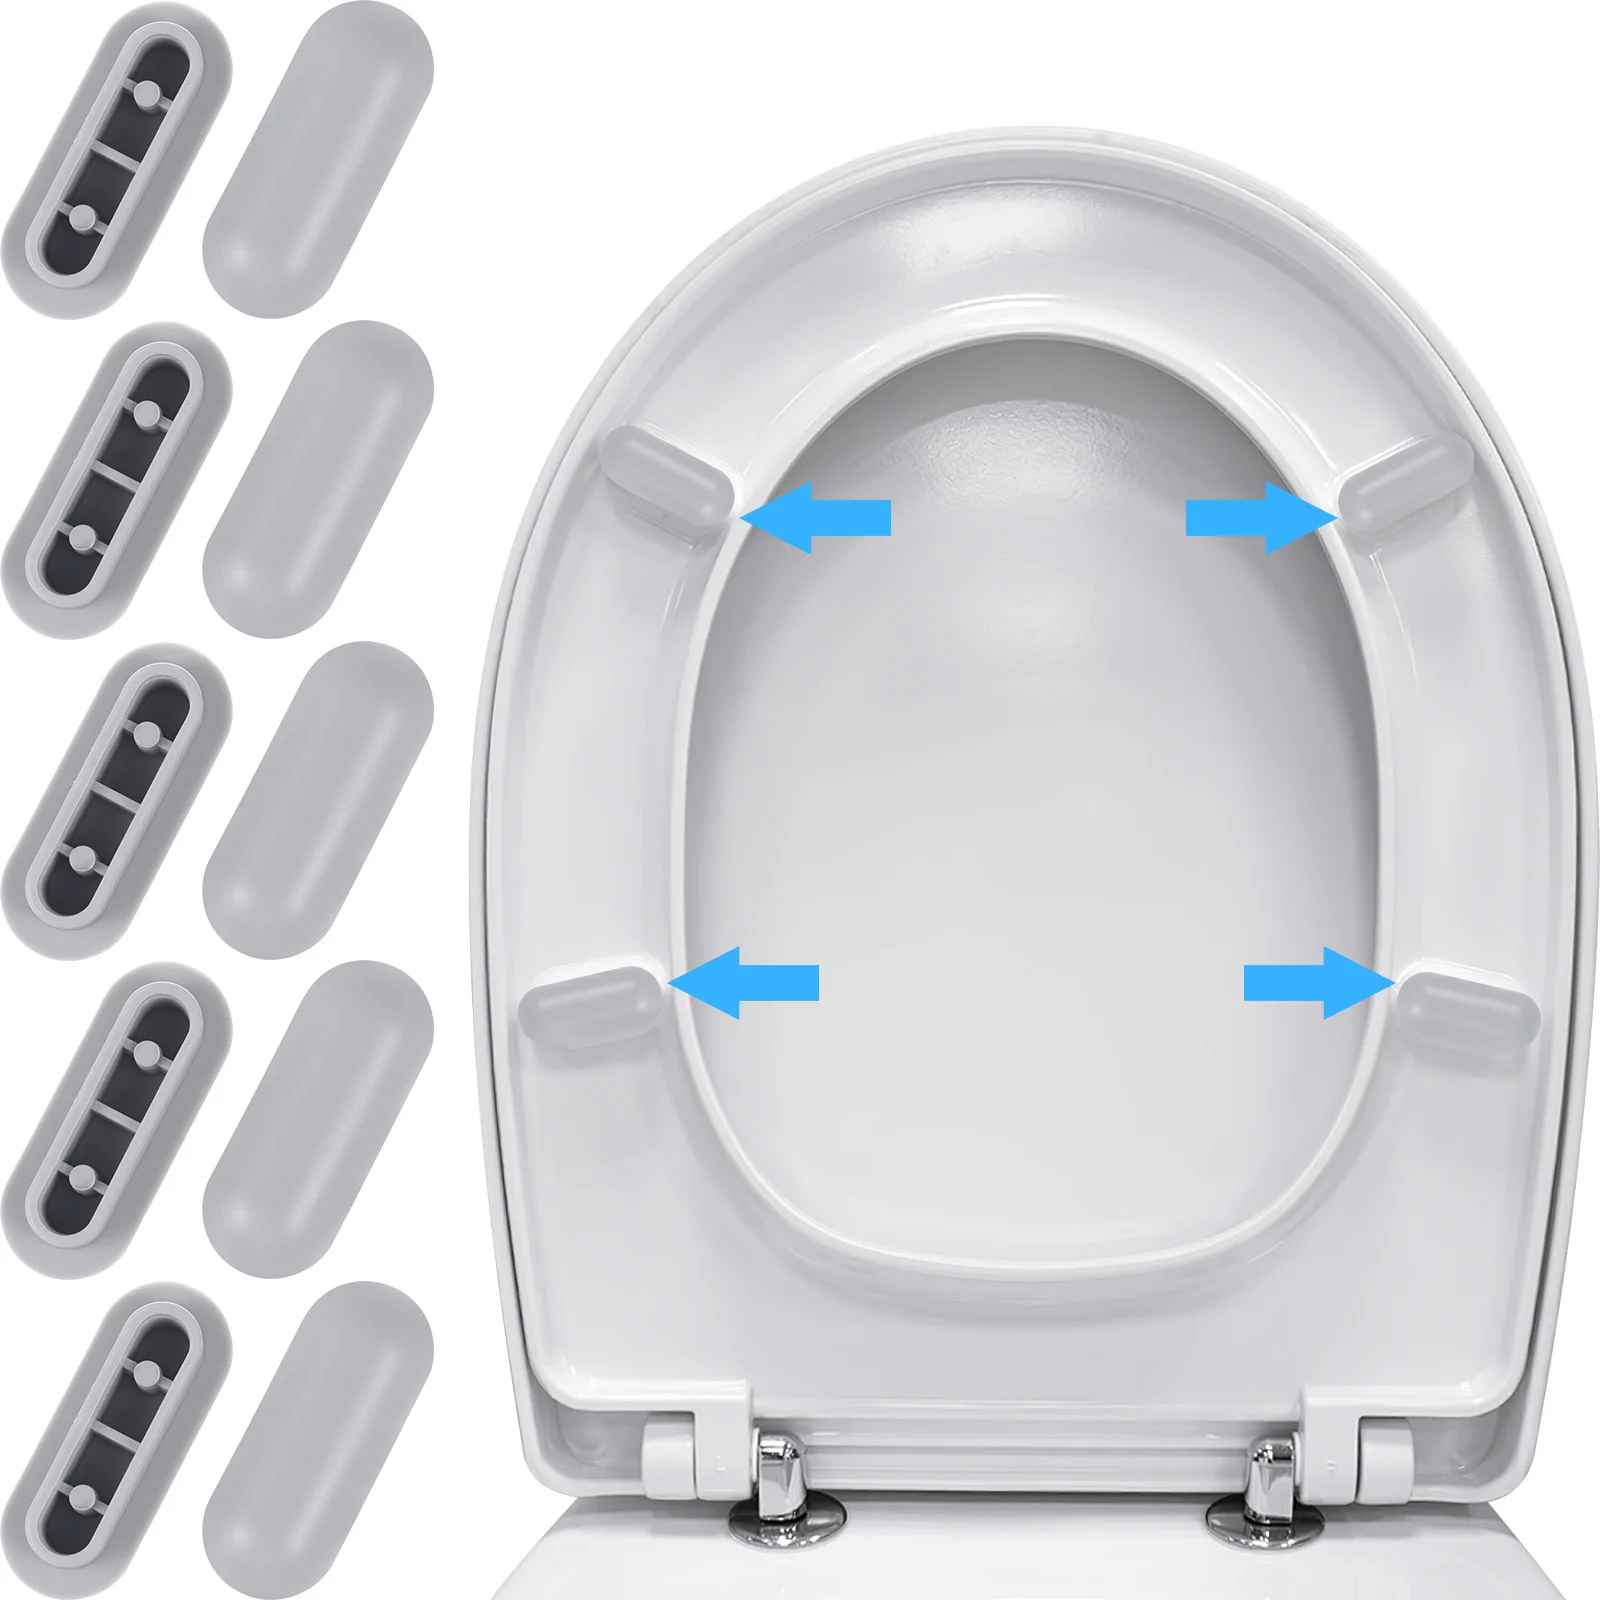 10 Pcs Portable Toilet Gasket Seat Bumpers Self-adhesive Pad Cushioning Pads Travel